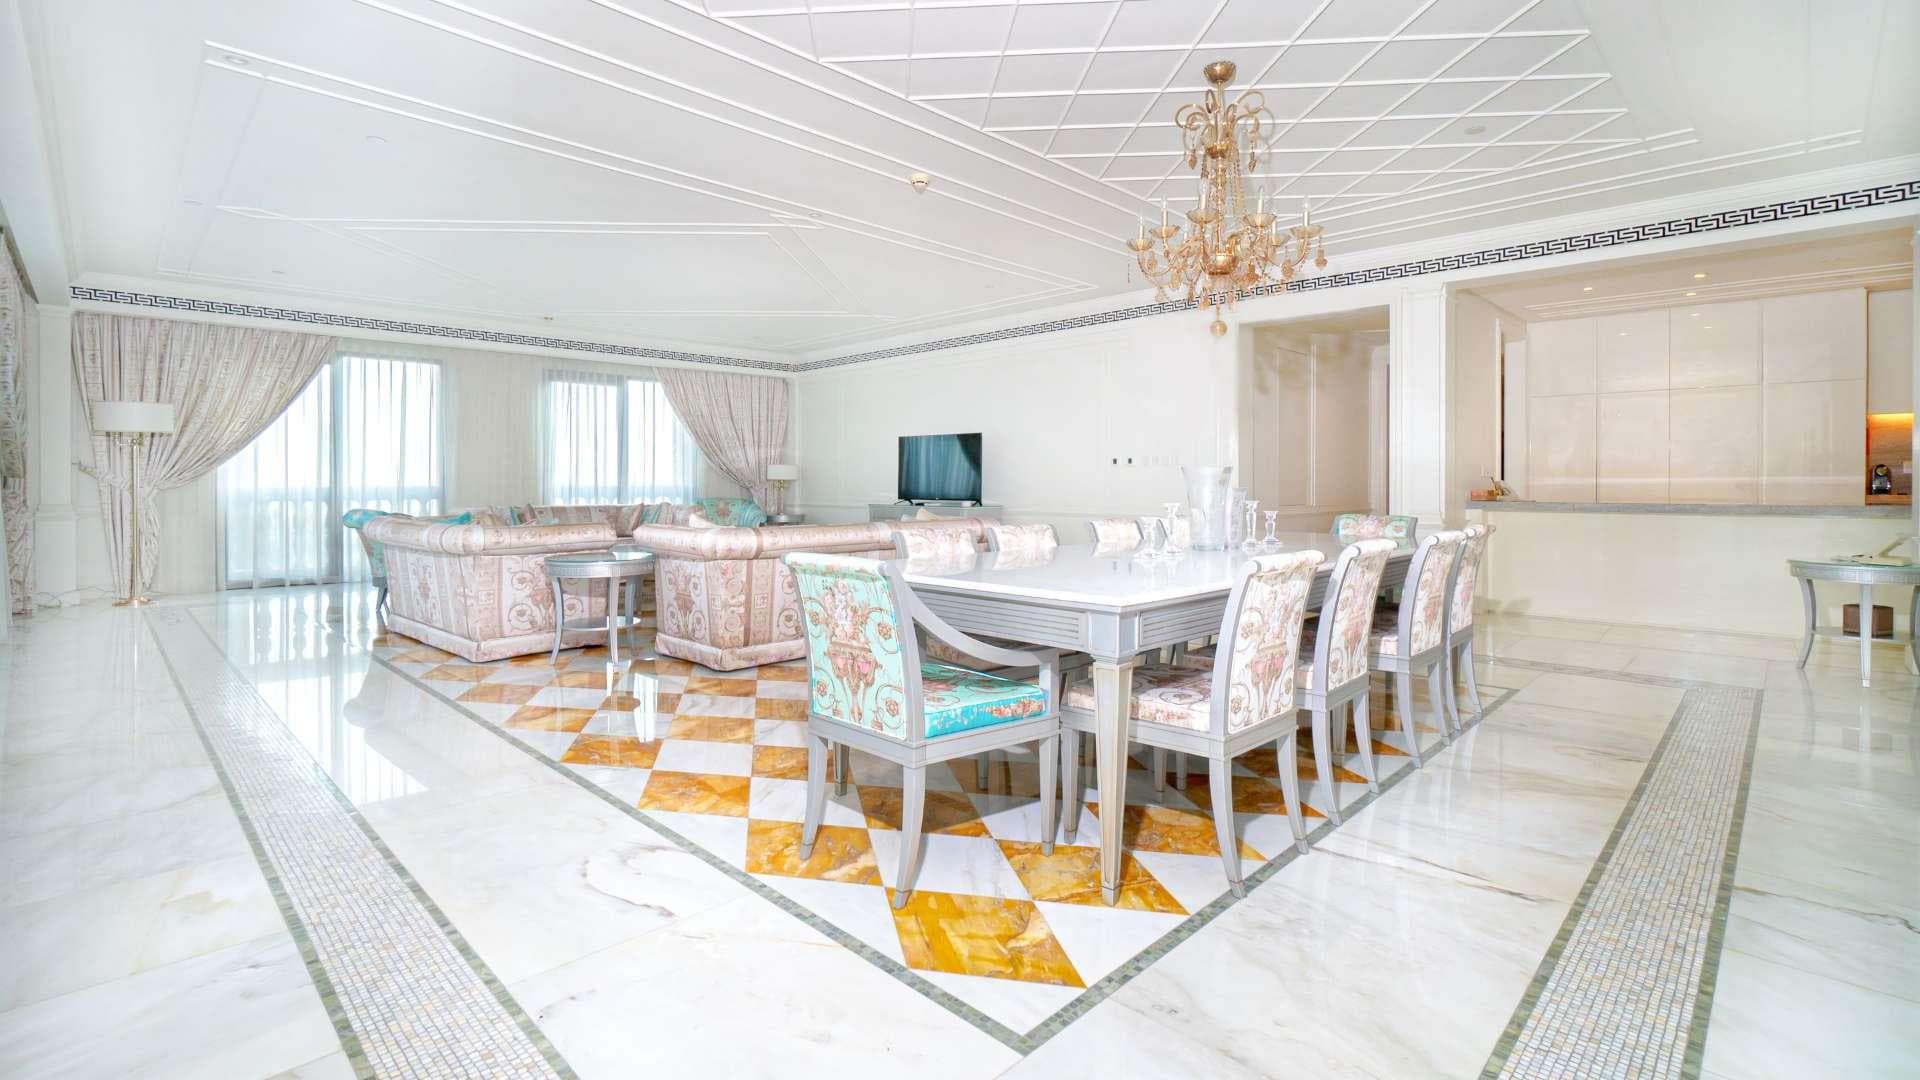 3 Bedroom Apartment For Sale Palazzo Versace Lp18598 2a6084b1d6f52c00.jpg